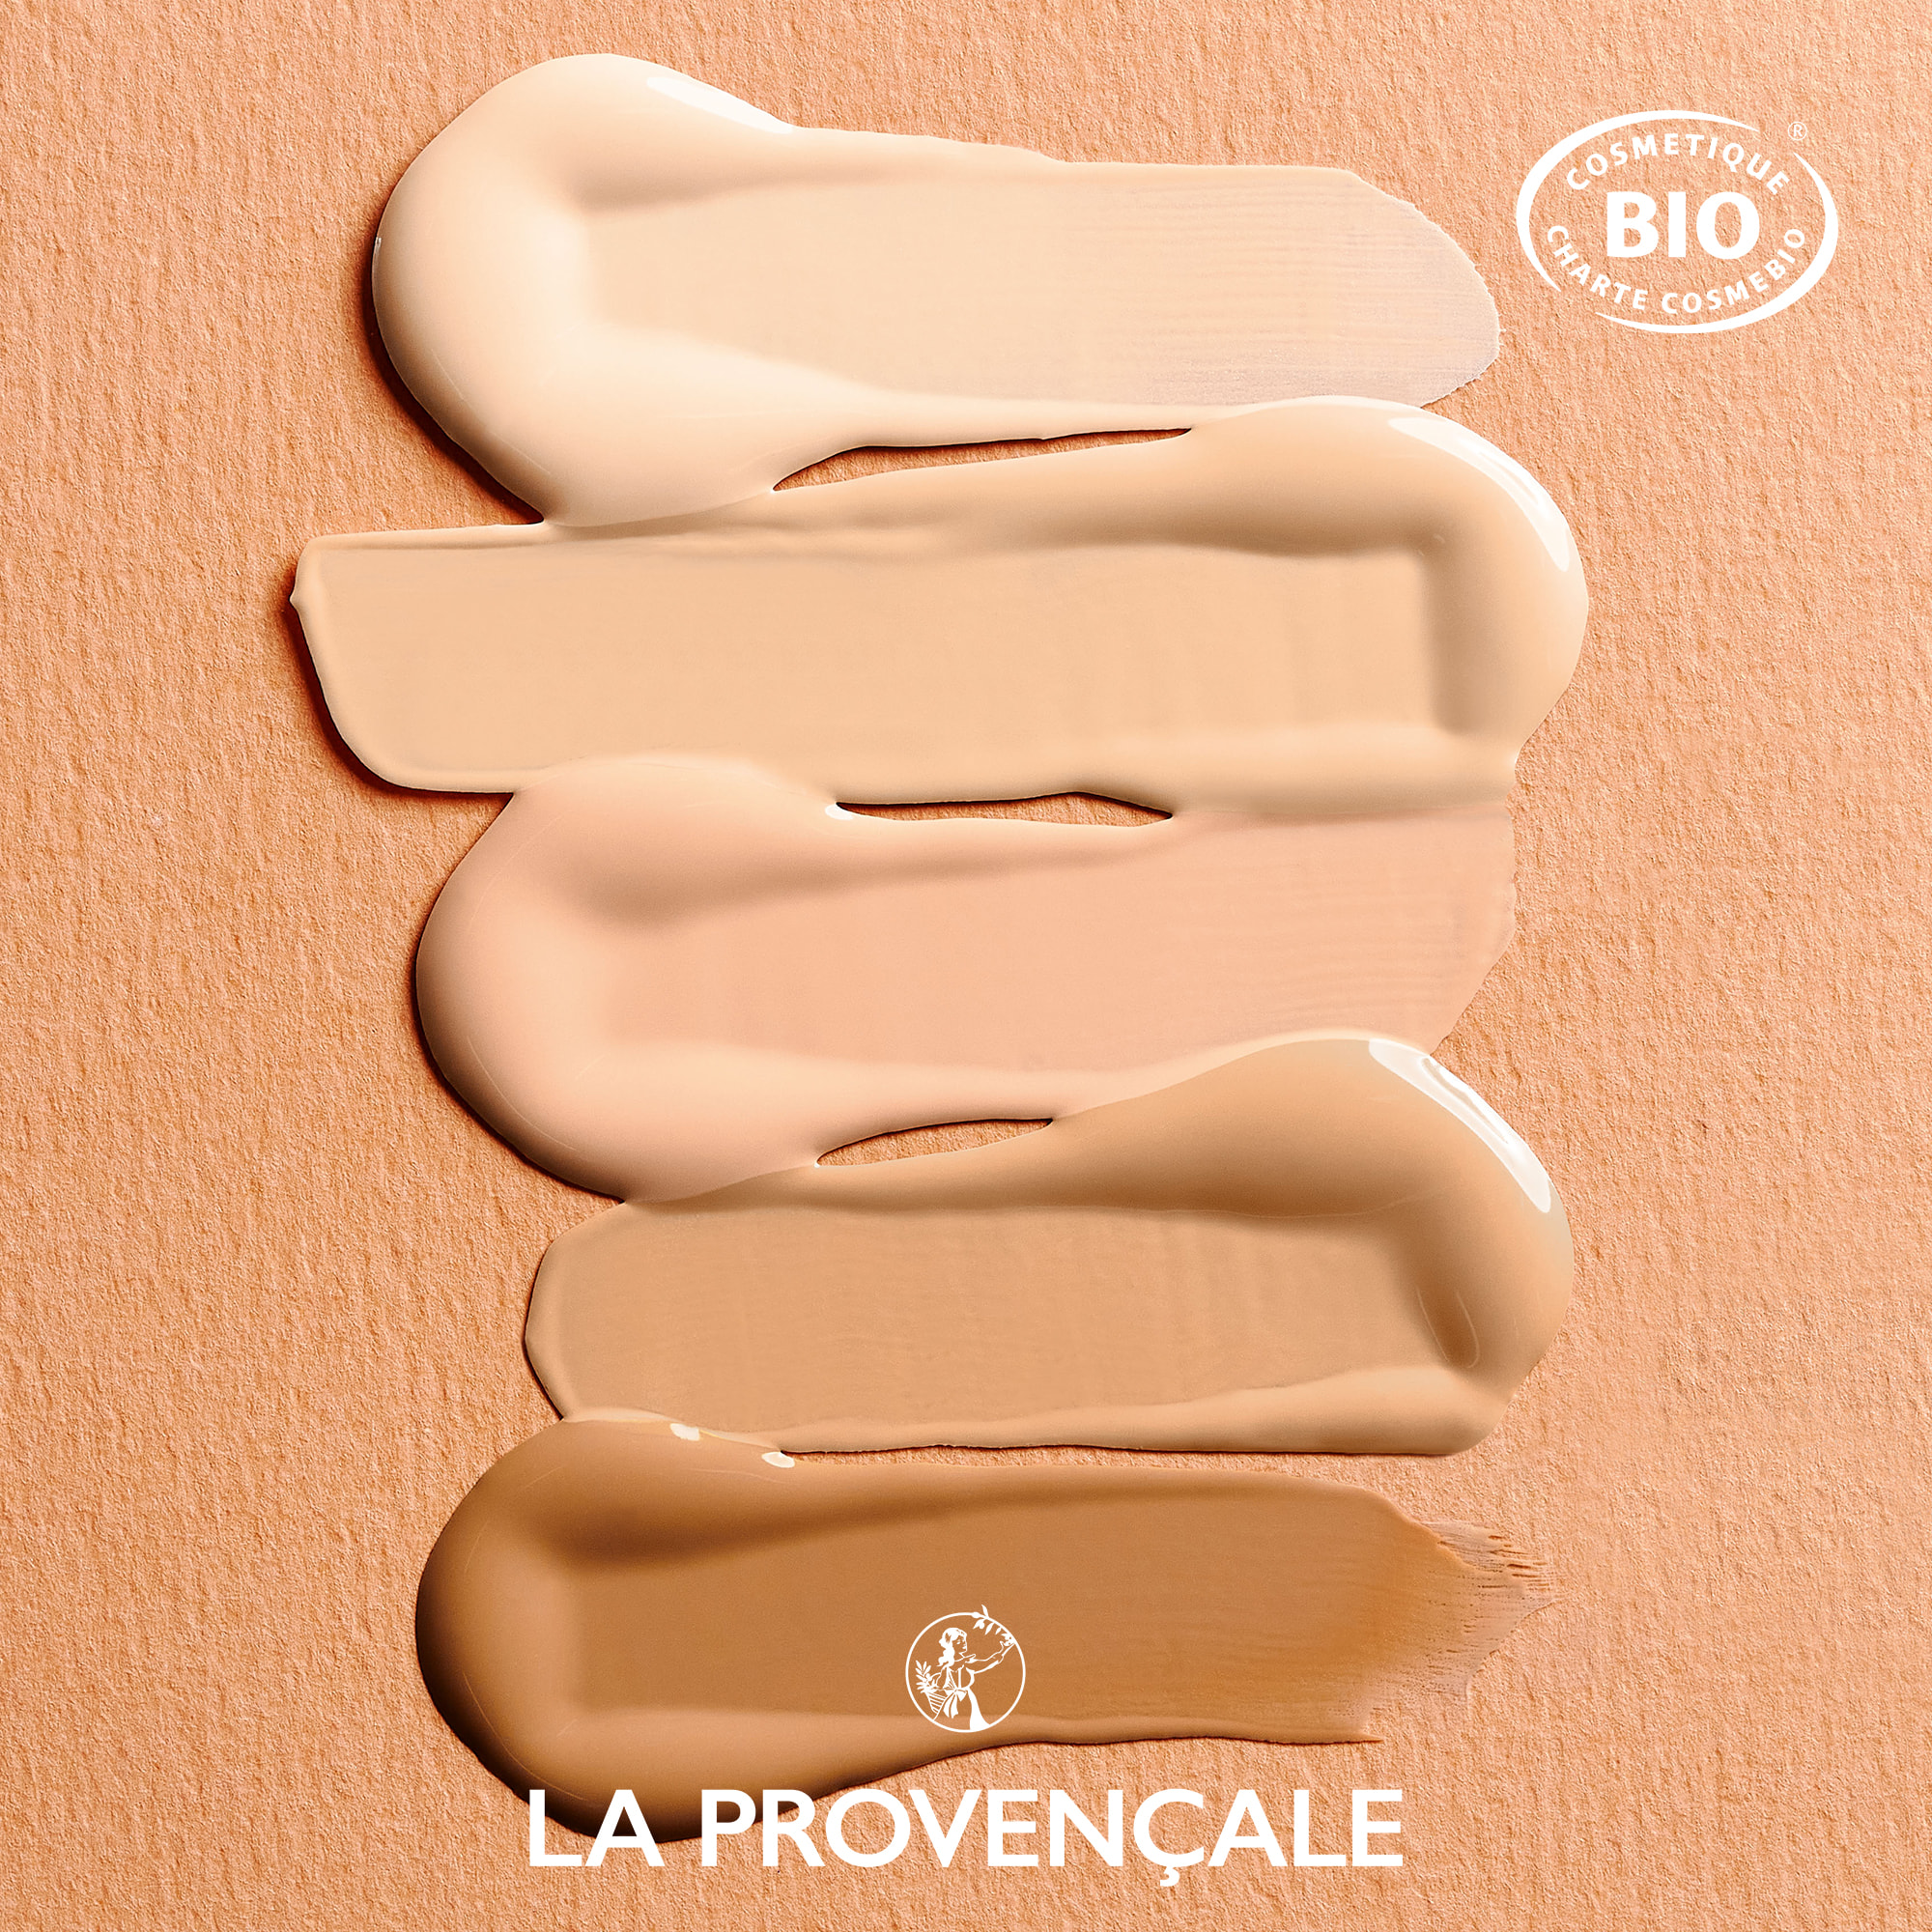 La Provençale - marque de cosmétiques bio de L'Oréal - Marques de France